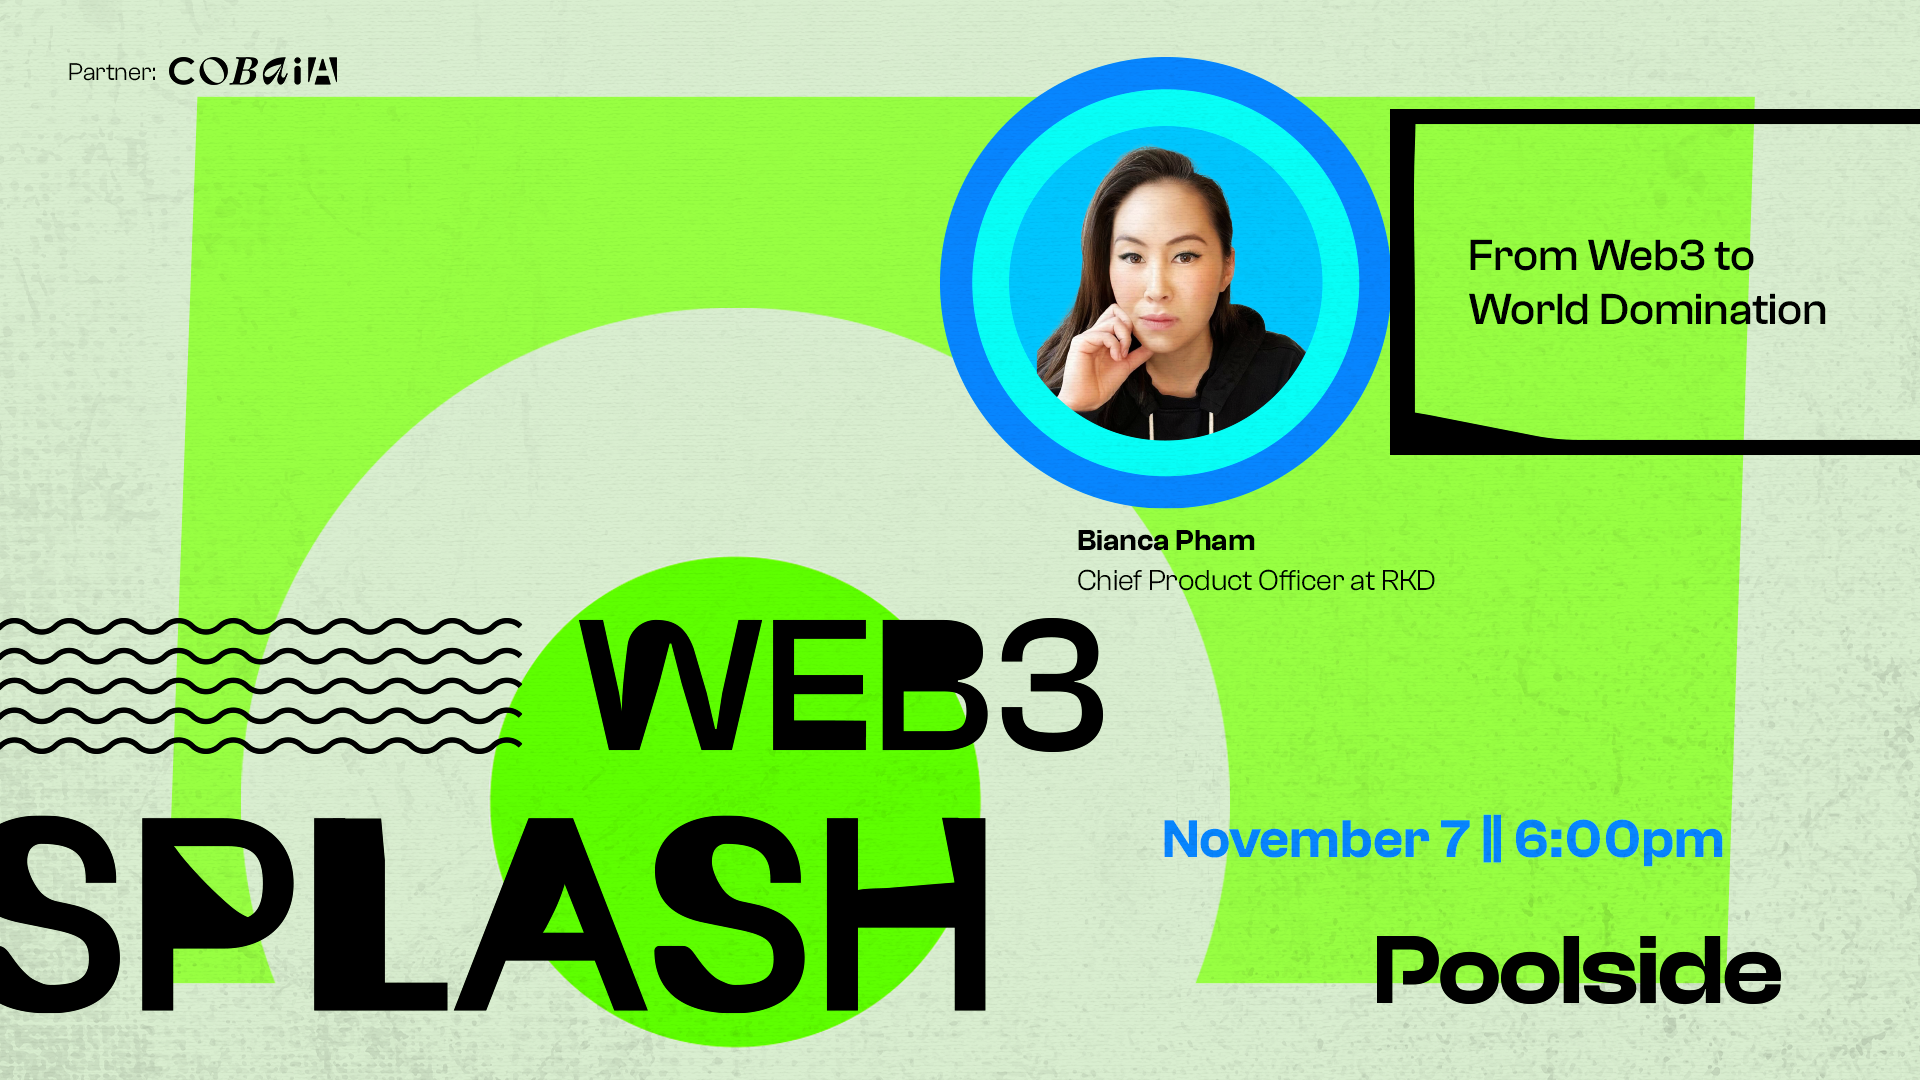 Web3 Splash #3: From Web3 to World Domination